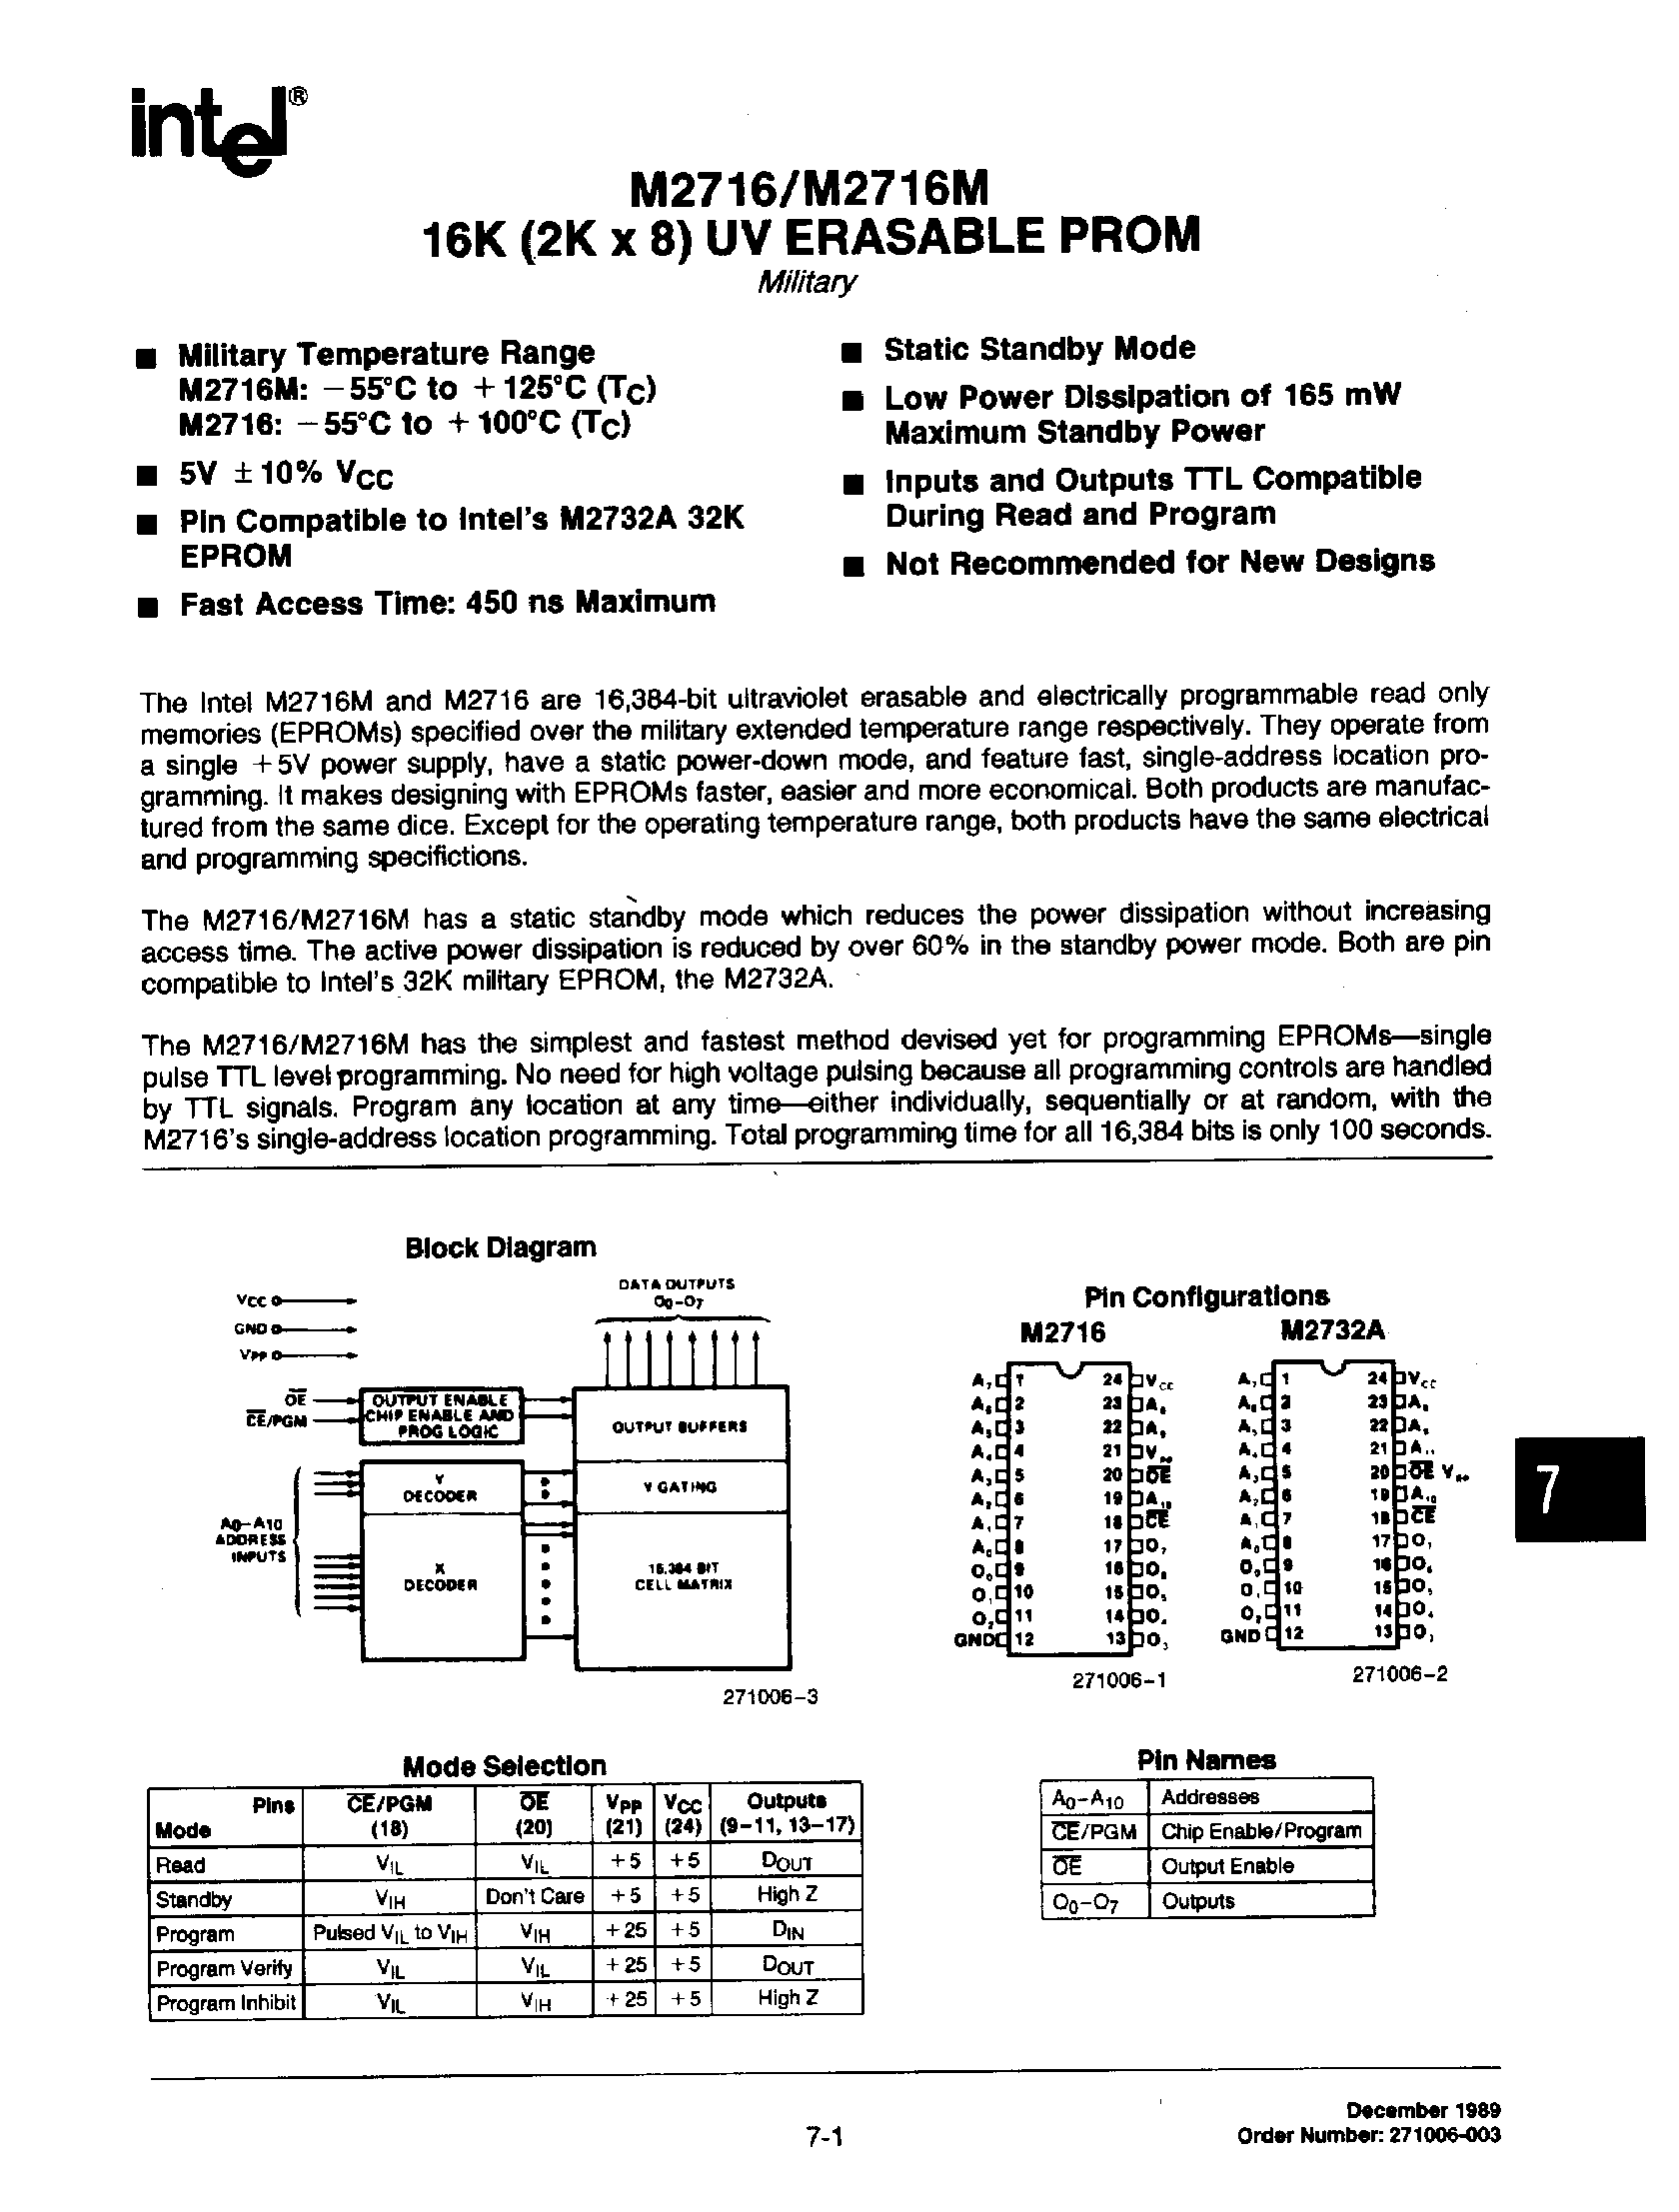 Datasheet D2716 - (M2716) 16K UV Erasable PROM page 1